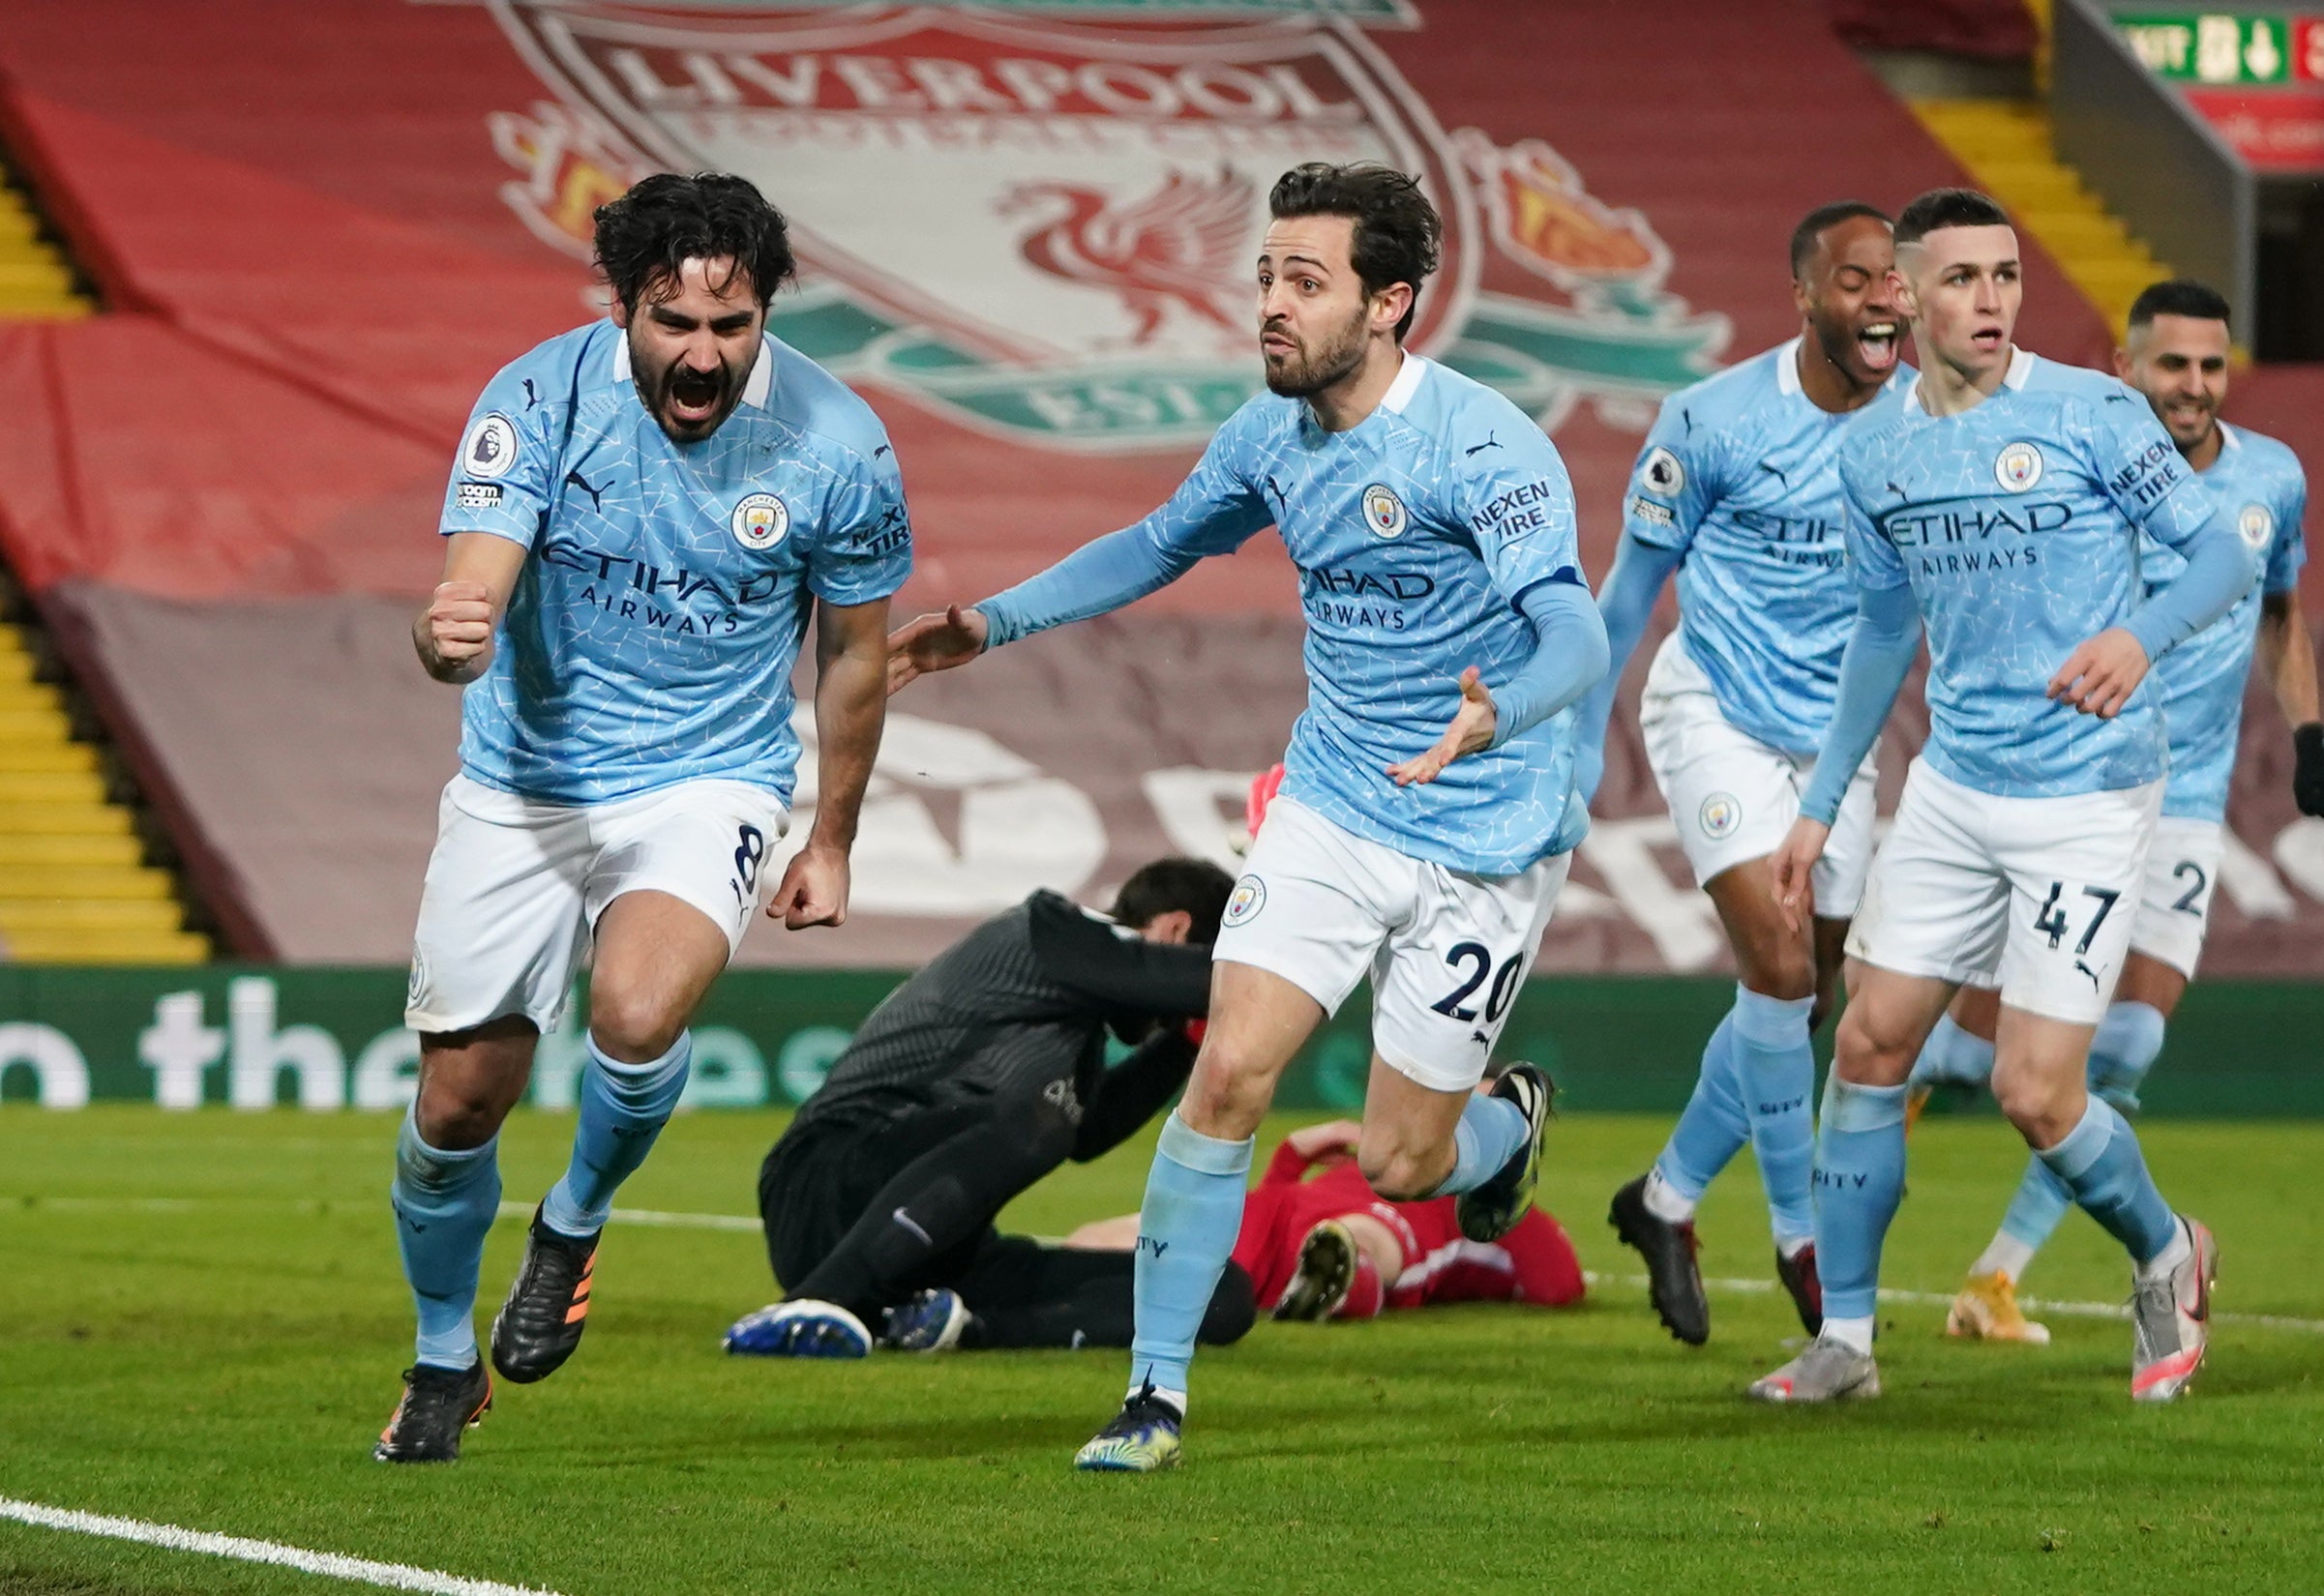 Ilkay Gundogan celebrates scoring against Liverpool